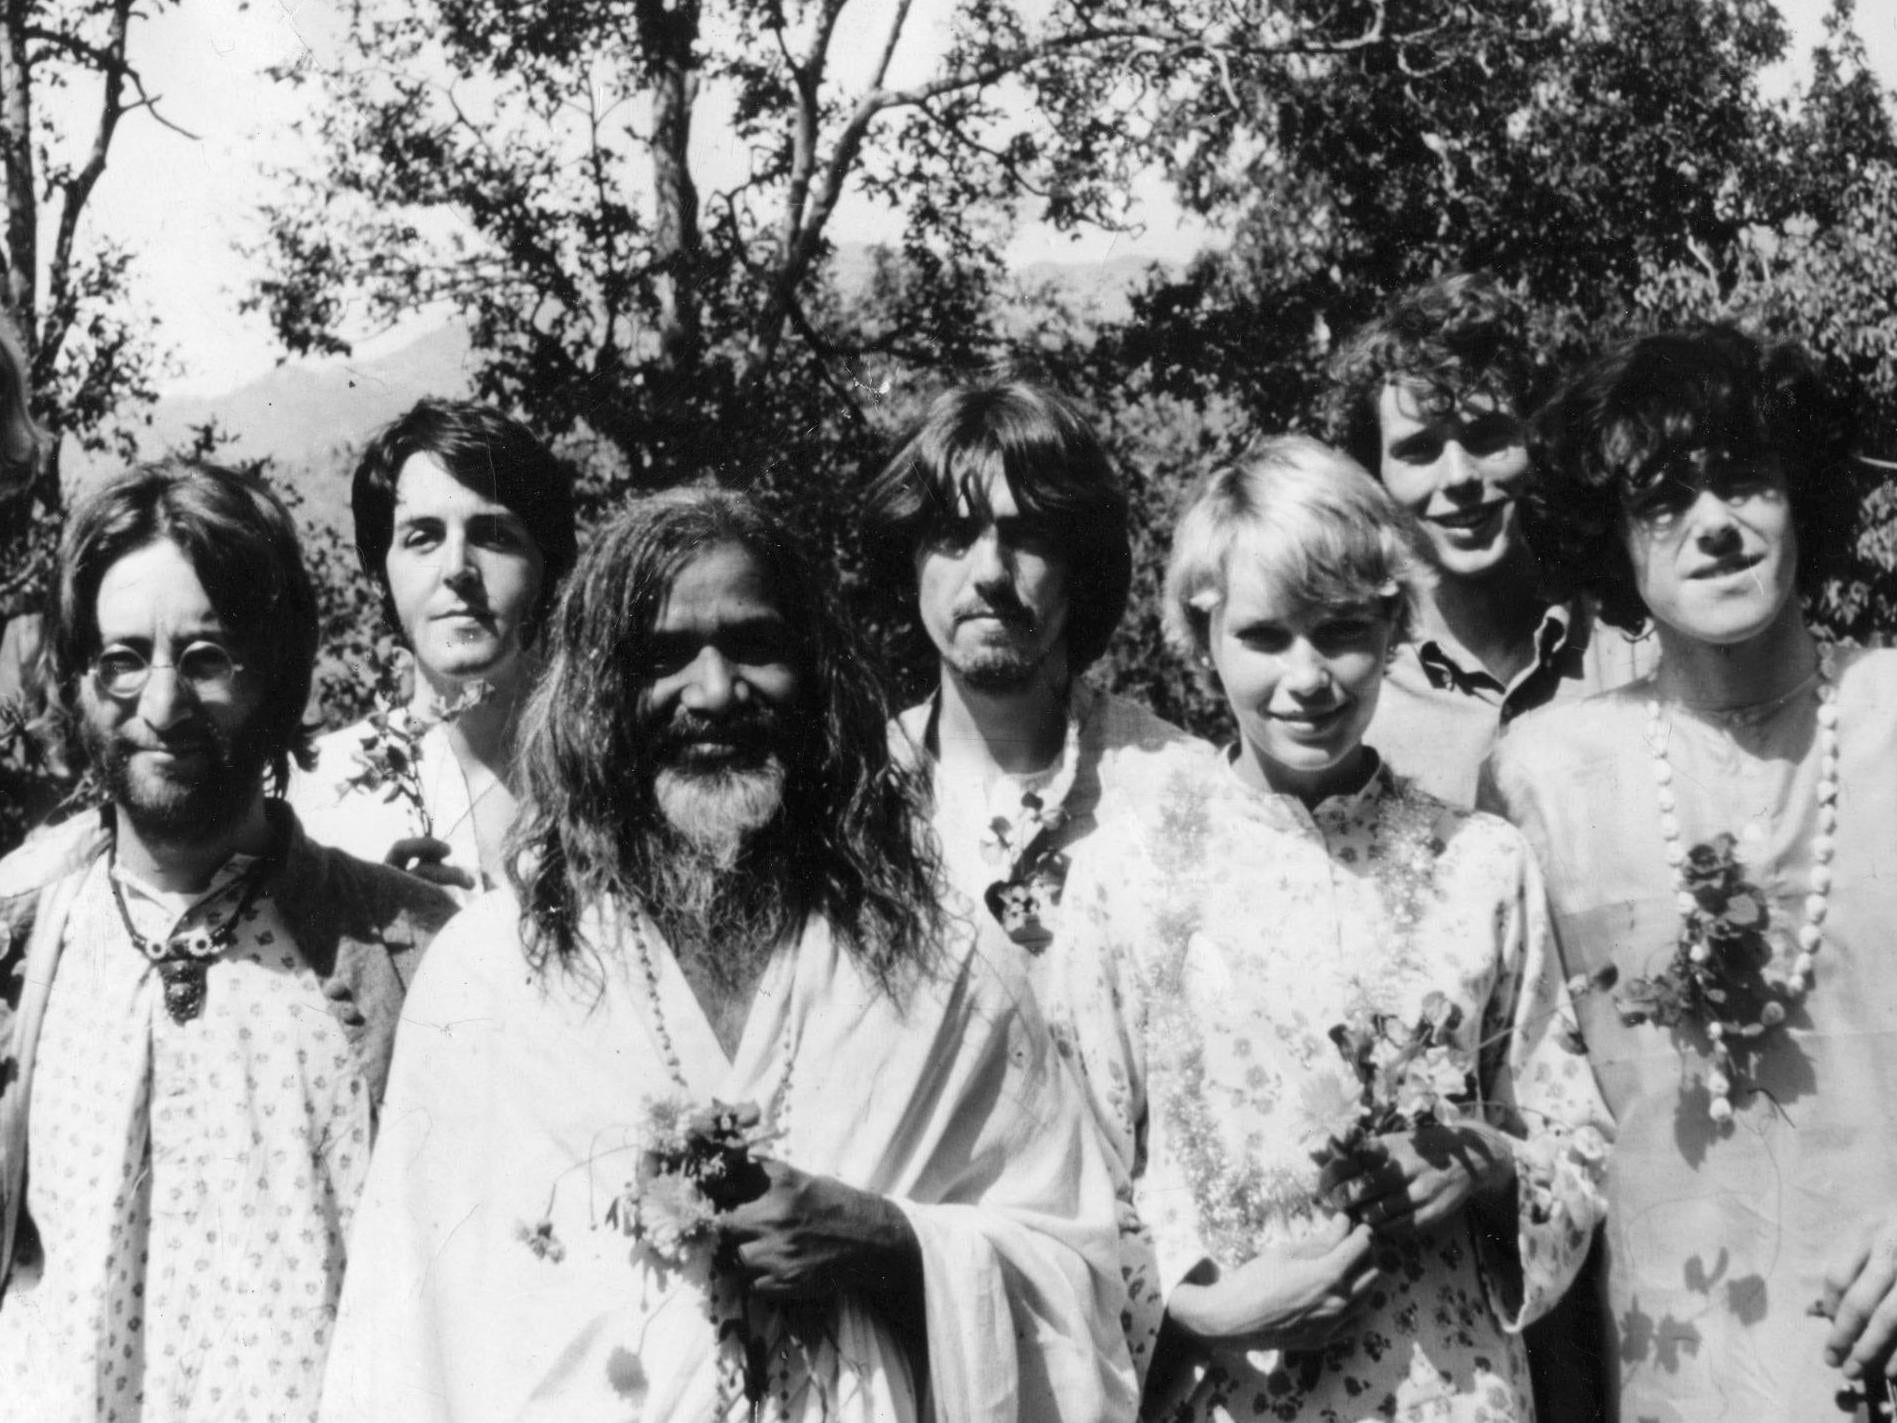 John Lennon, Paul McCartney, the Maharishi Mahesh Yogi, George Harrison, actor Mia Farrow and musician Donovan (far right) in Rishikesh, India, in 1968